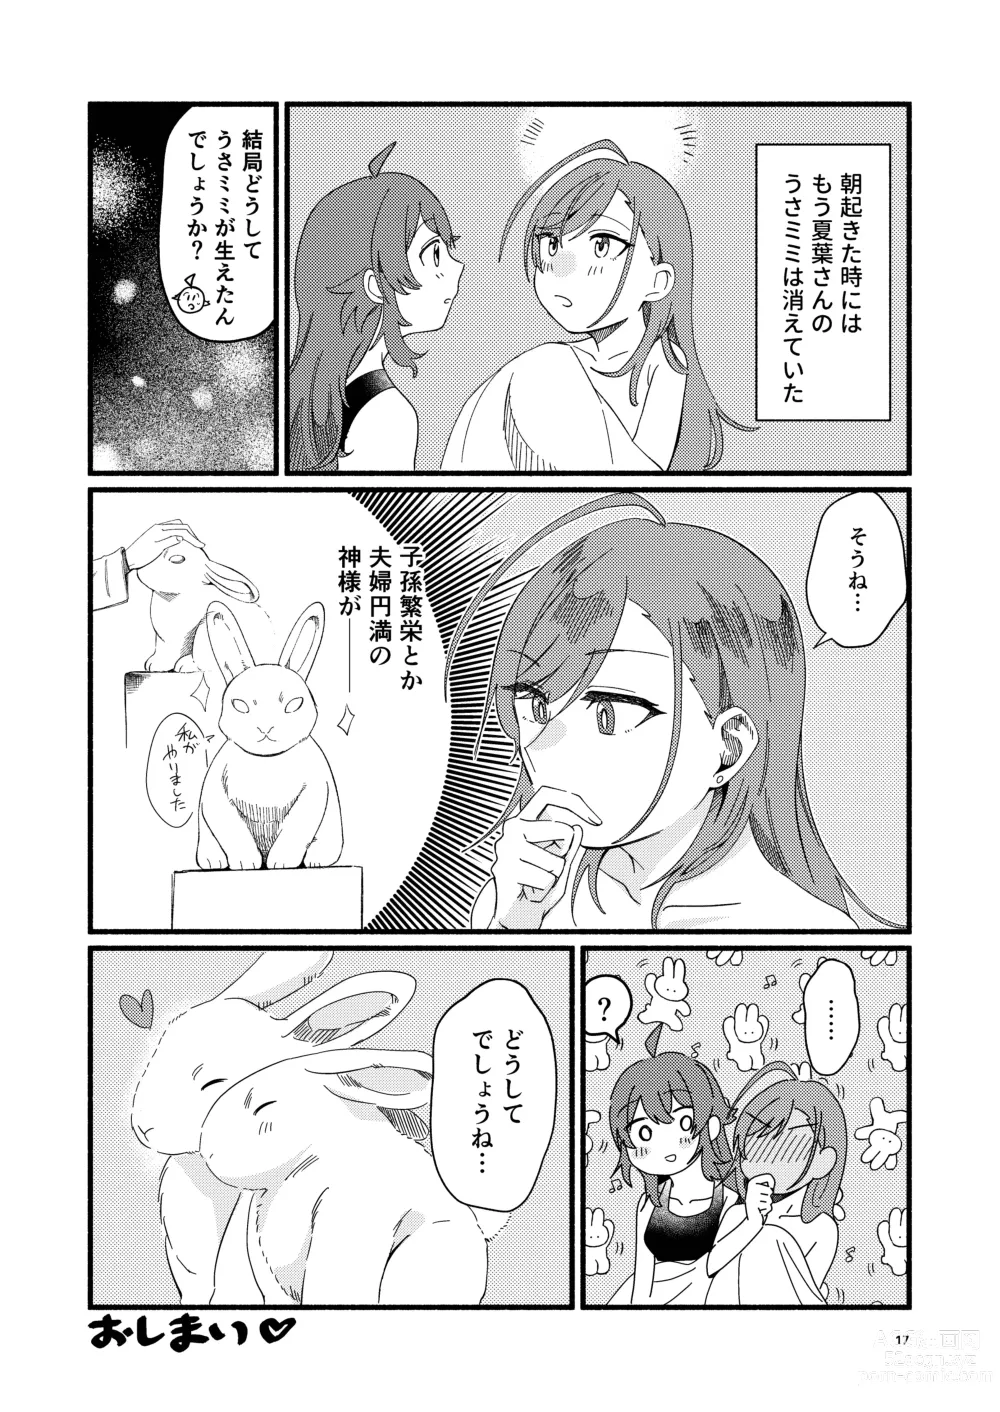 Page 17 of doujinshi Usagi no Ongaeshi